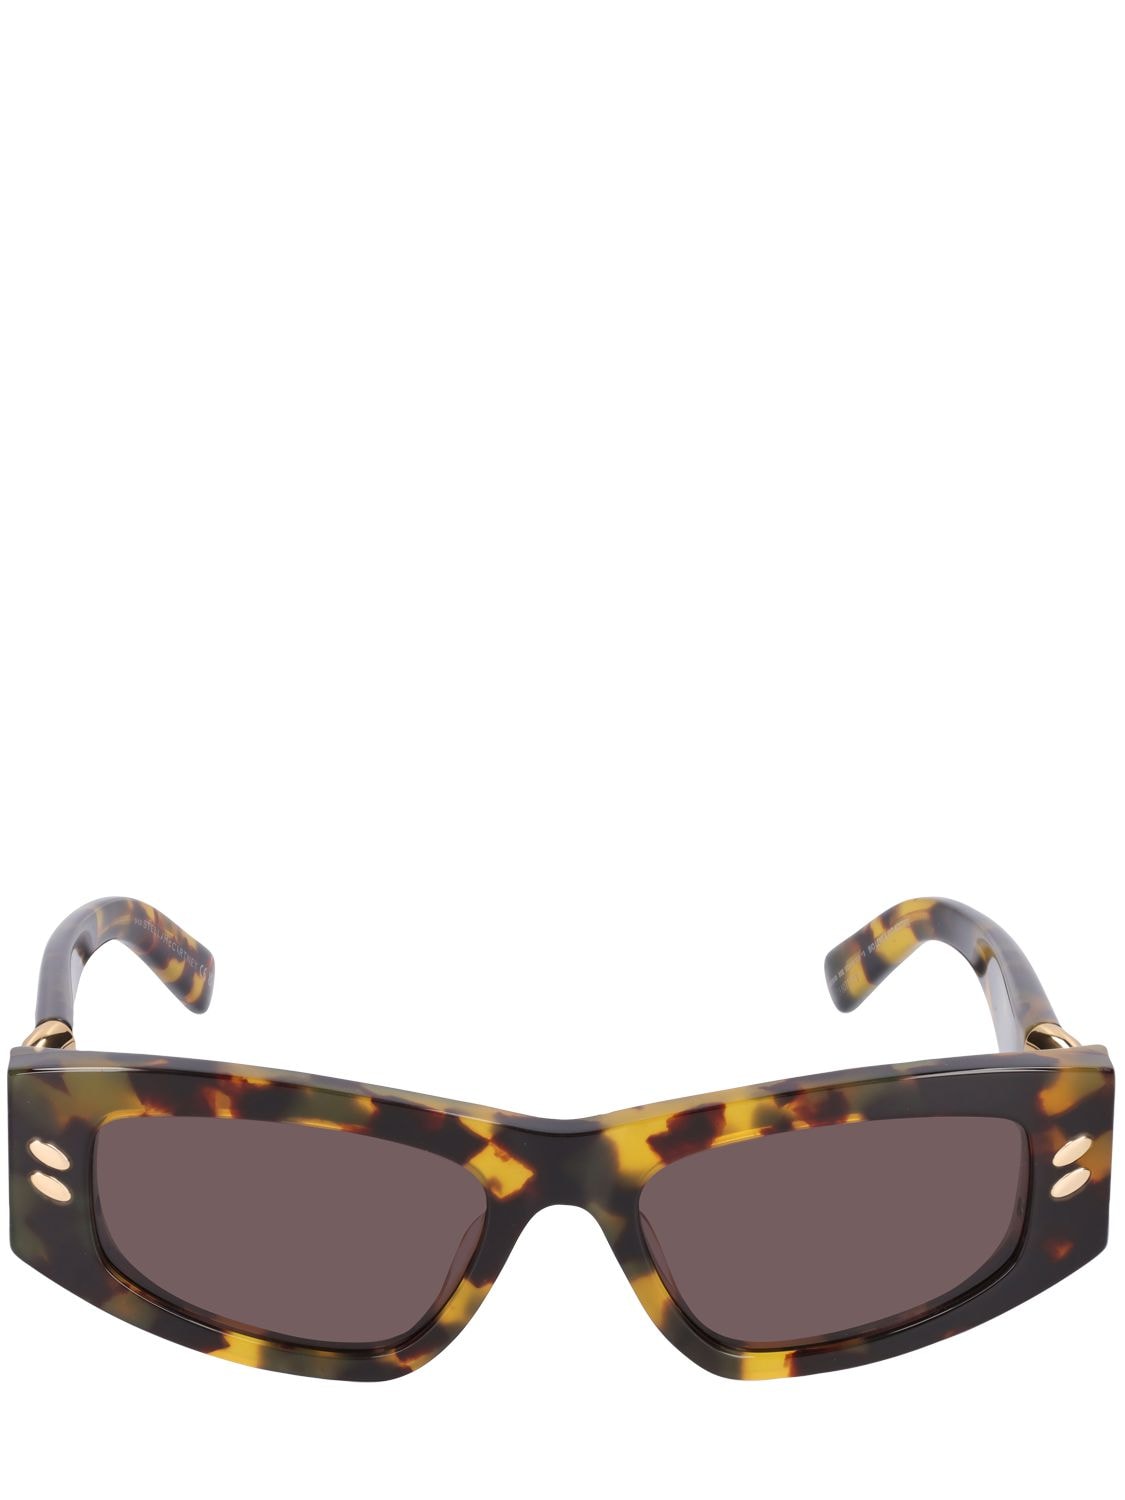 Image of Falabella Squared Acetate Sunglasses